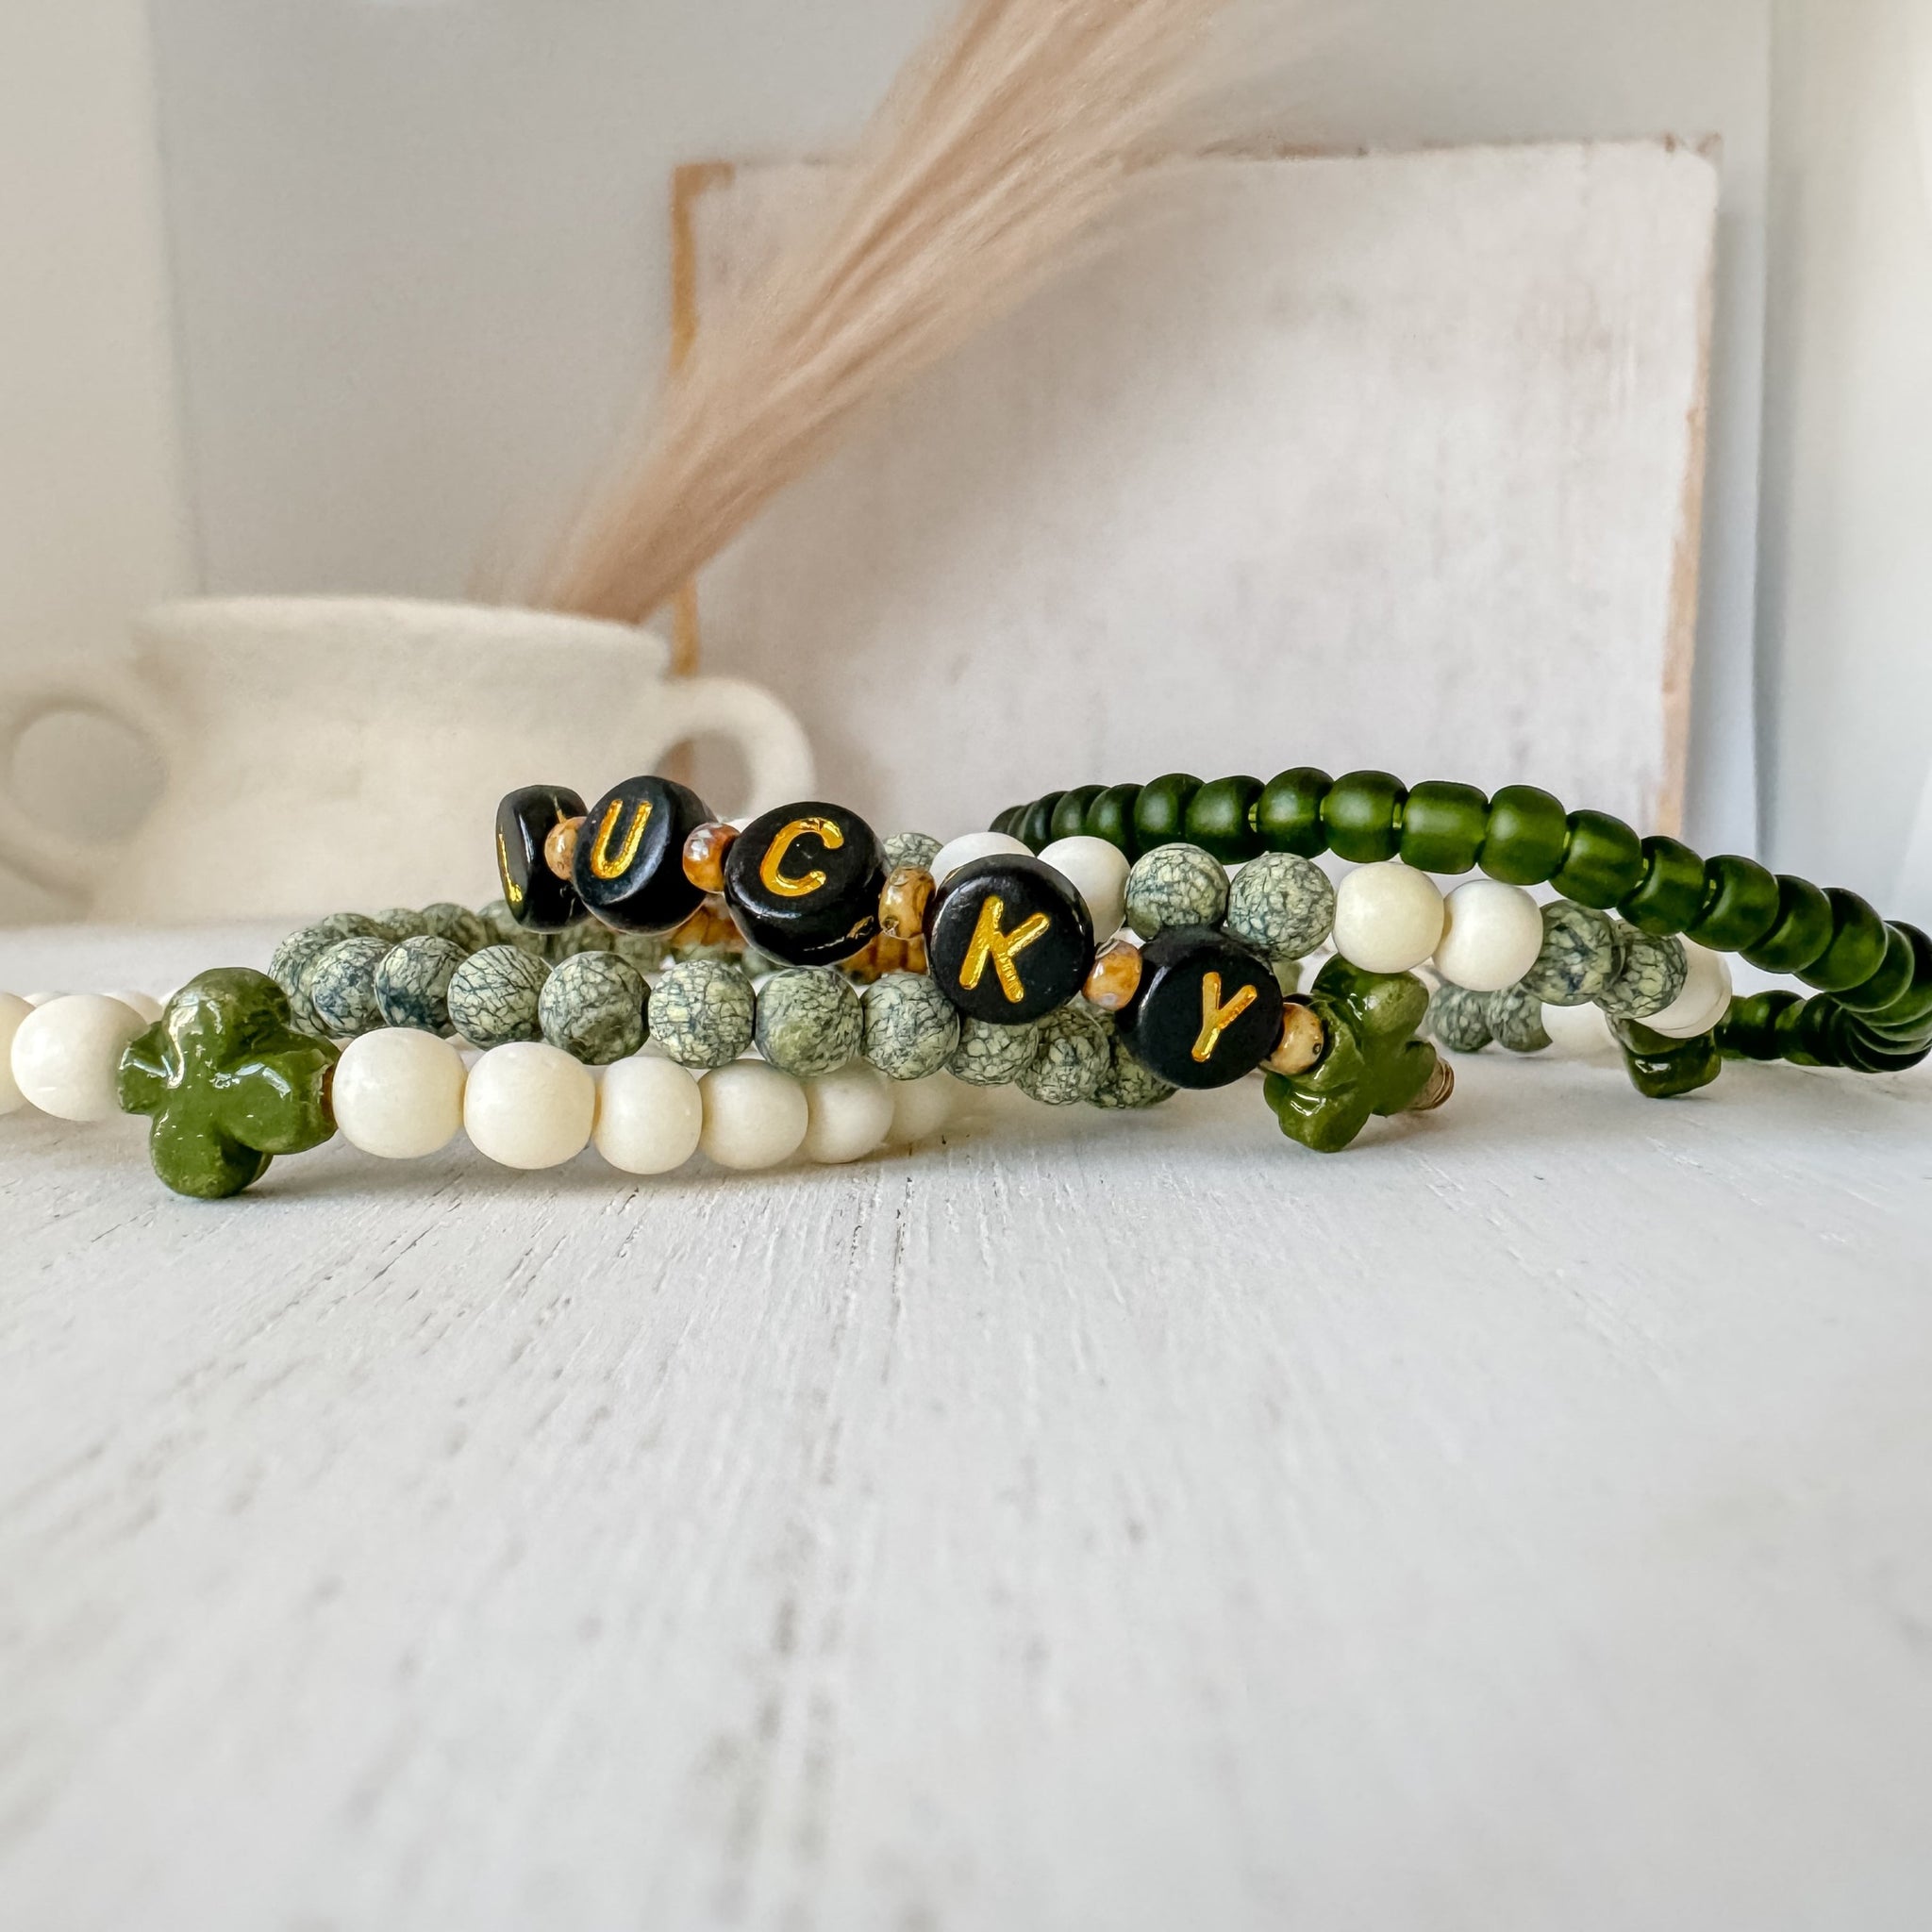 Feelin’ LUCKY Girls Saint Patrick’s Day Bracelets - Set of 3 or Each - Unisex Options